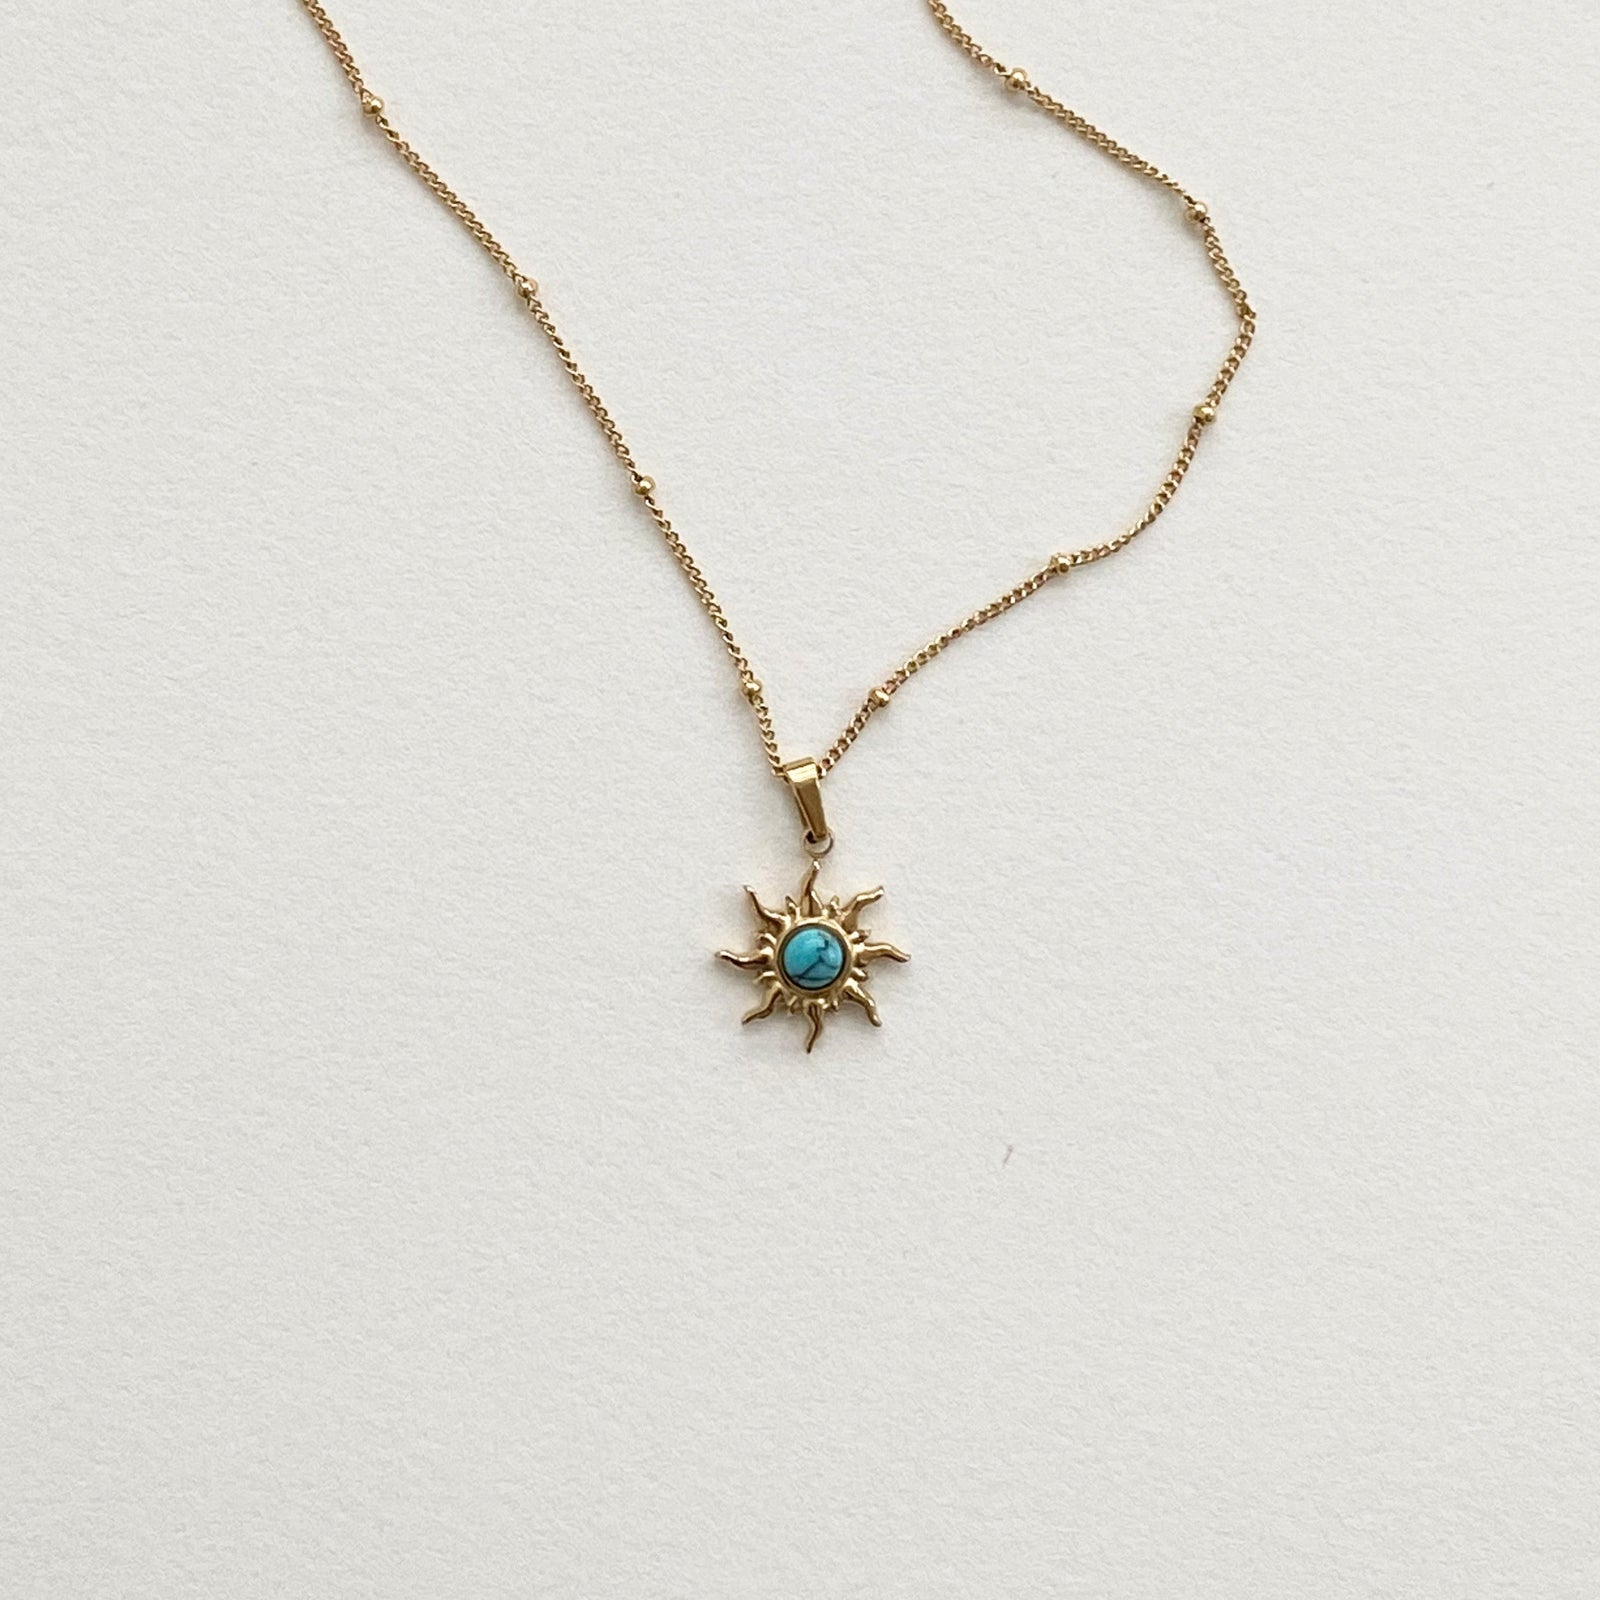 Meideya jewelry turquosie sun pendant necklace